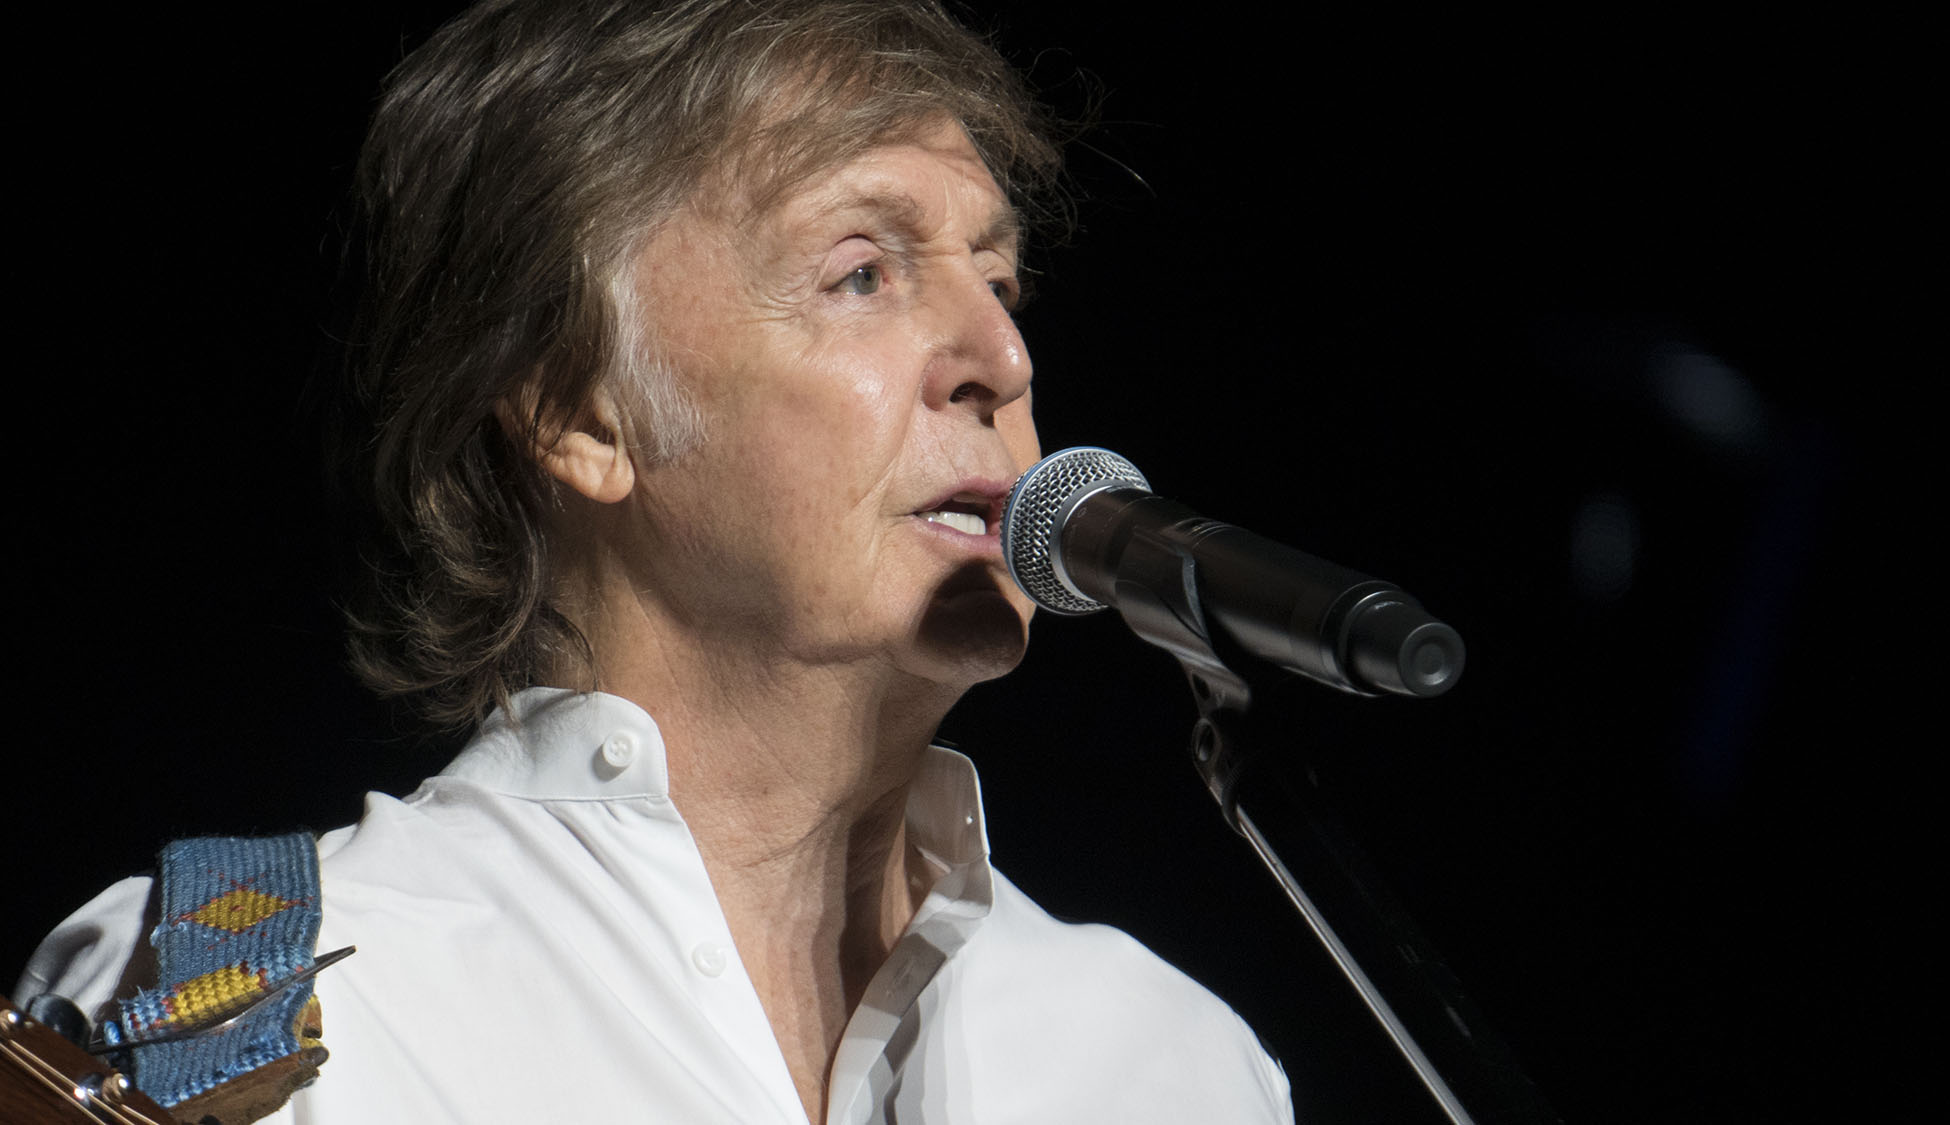 Paul McCartney at the Barclays Center, Brooklyn, NY 9-19-17